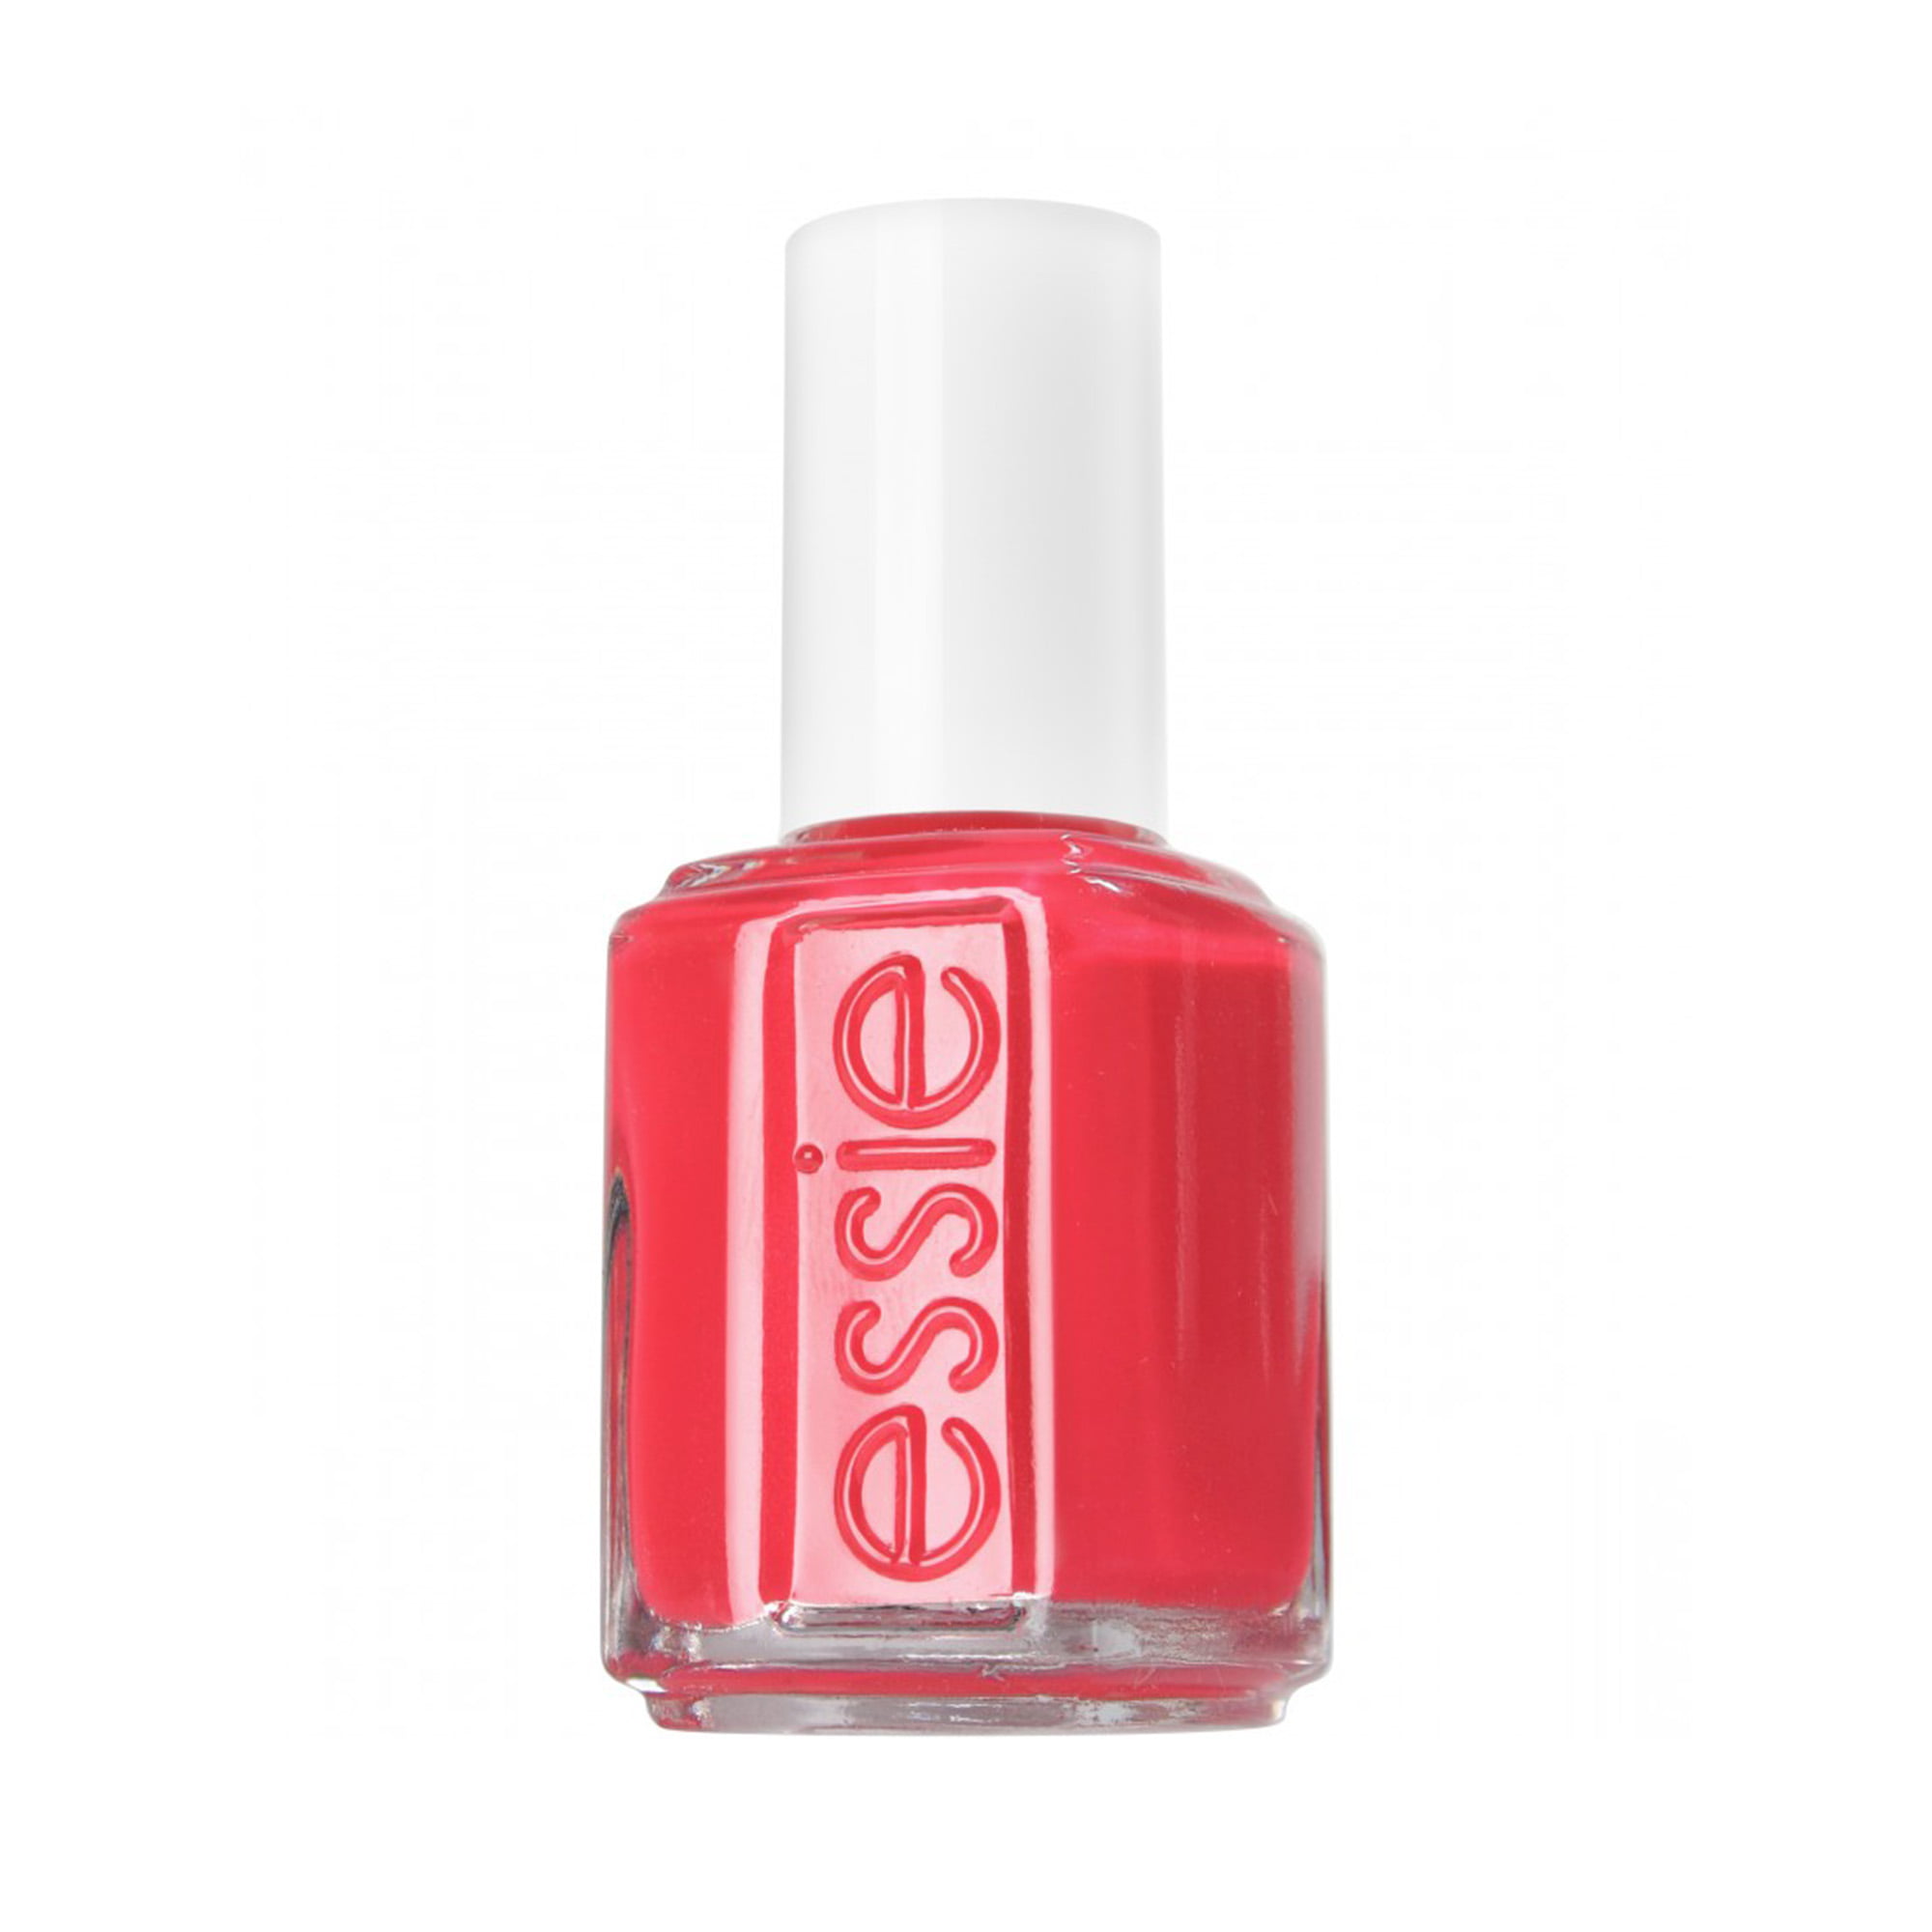 Essie Nail Color Polish, 0.46 fl oz - Meet me at Sunset